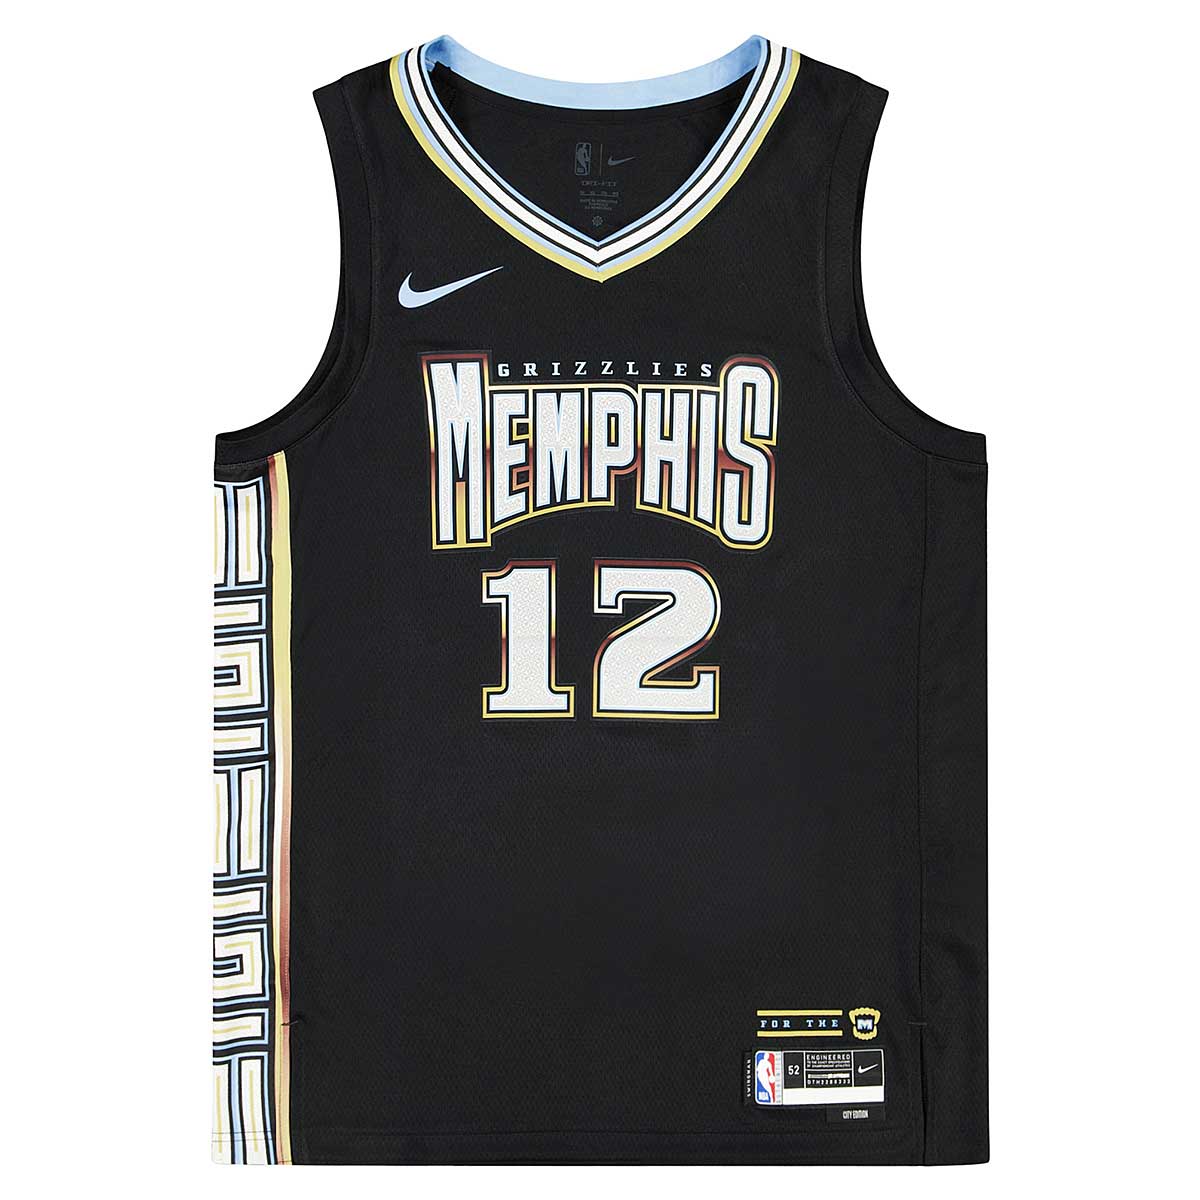 Nike Youth Memphis Grizzlies Ja Morant #12 Blue Dri-FIT Swingman Jersey